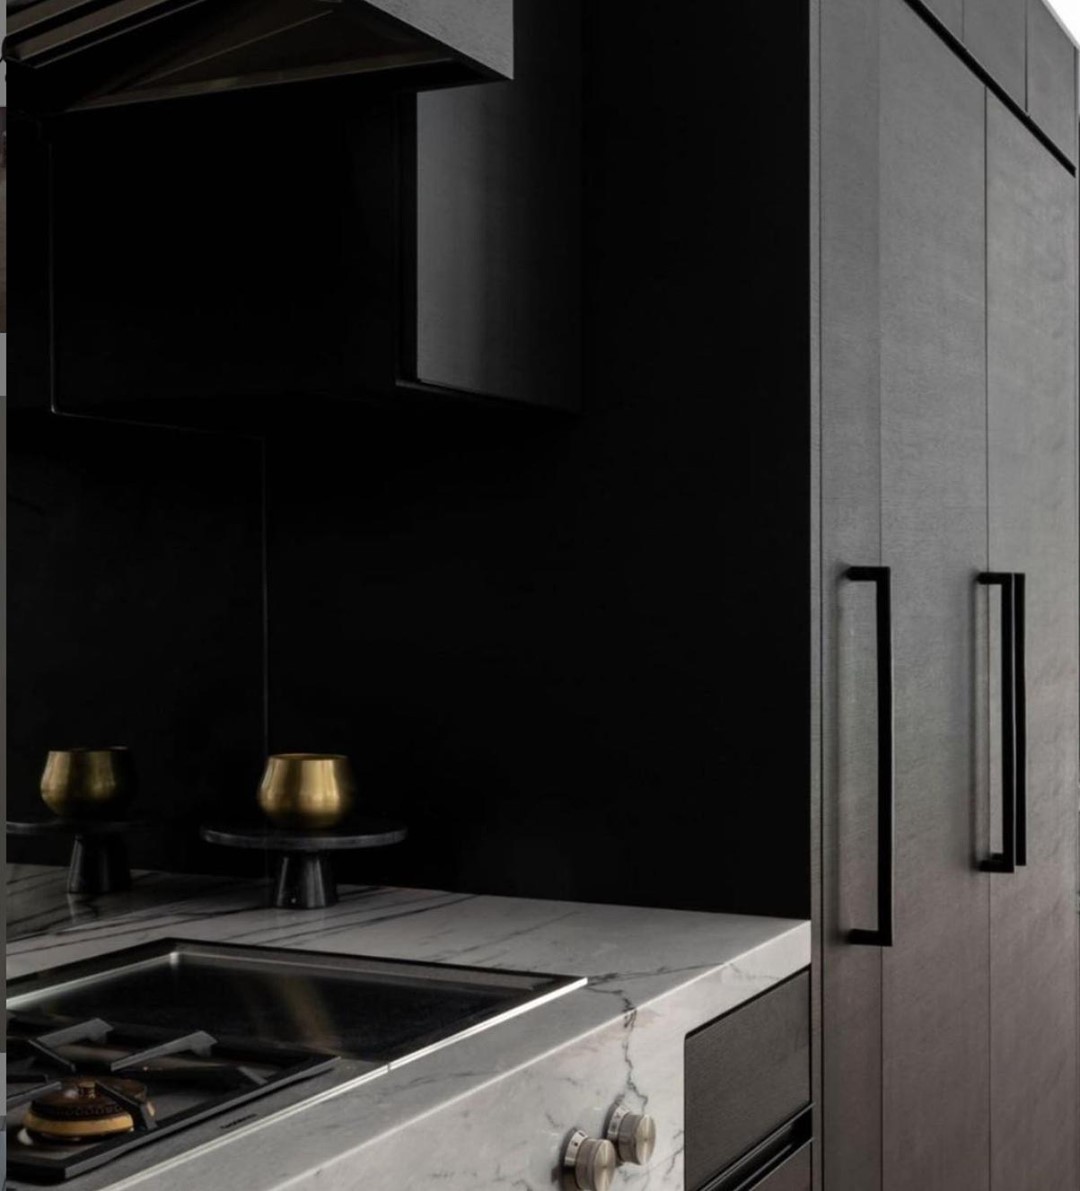 These black cabinets are a total mood 🖤⁠
⁠
@lankerani_architecture⁠
@foursquarebuilders⁠
@jl_hardware_atx⁠
@lovecounty.⁠
⁠
 @rtarchitecturephotography